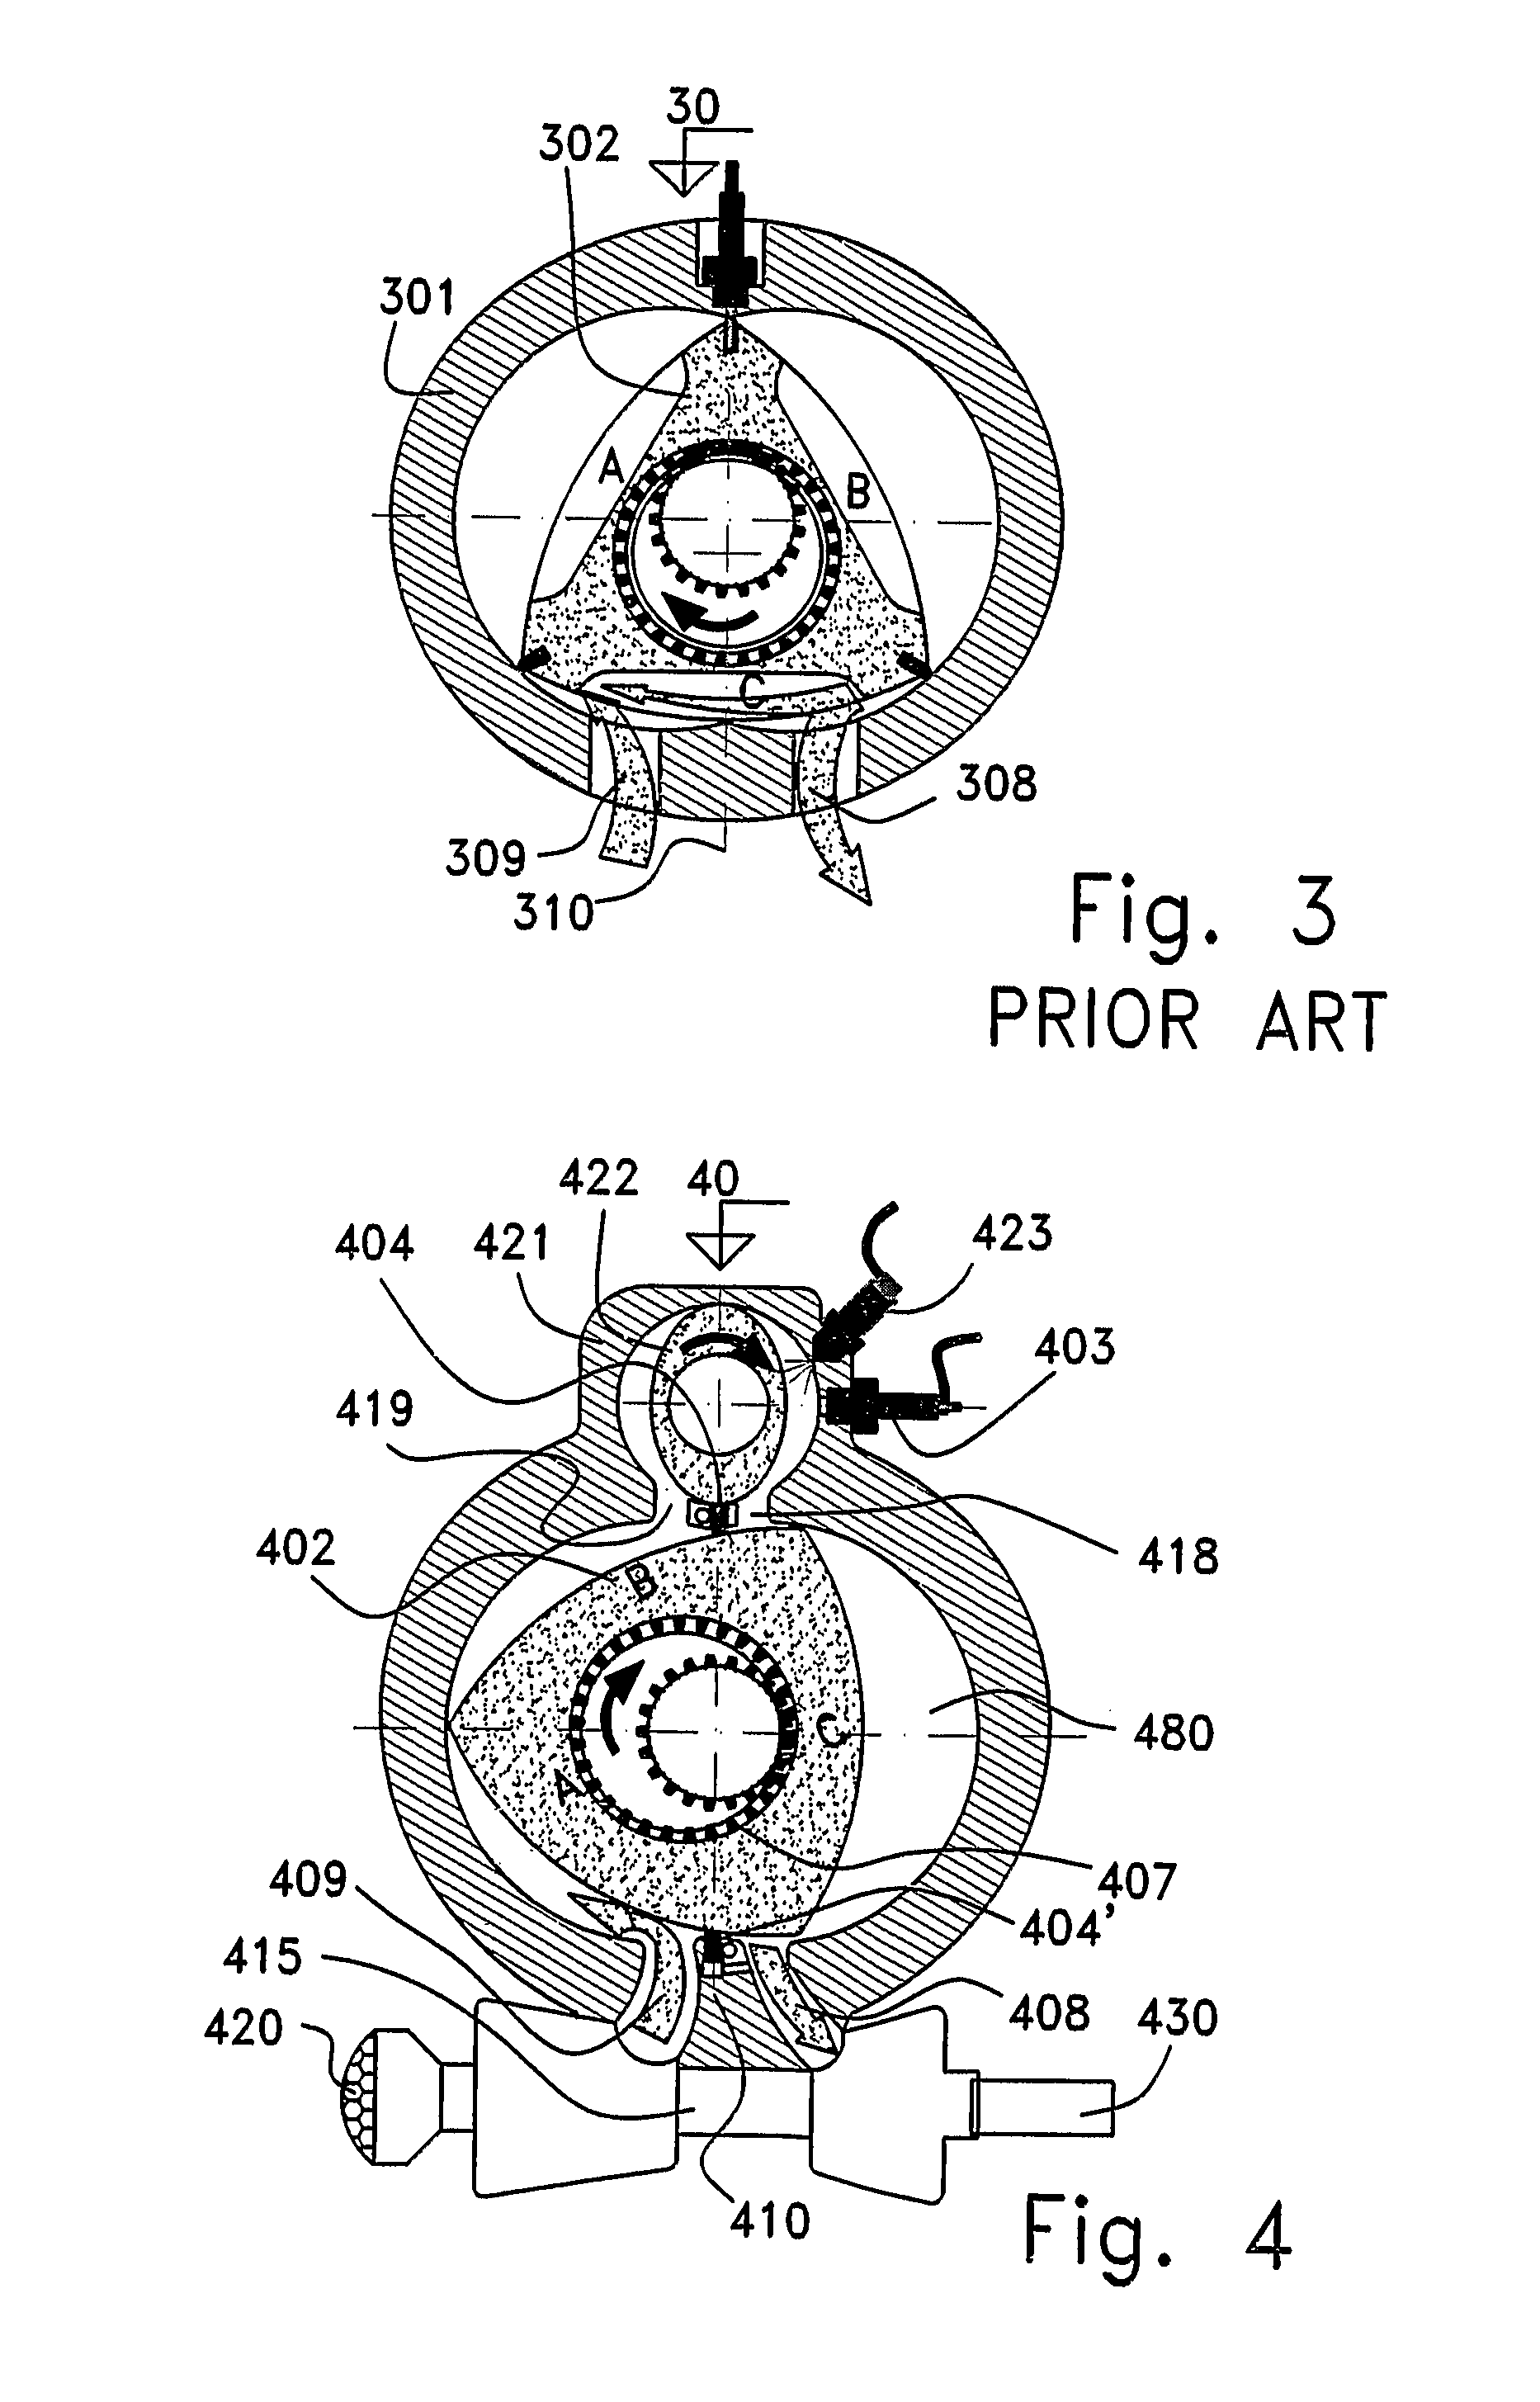 Wankel and similar rotary engines